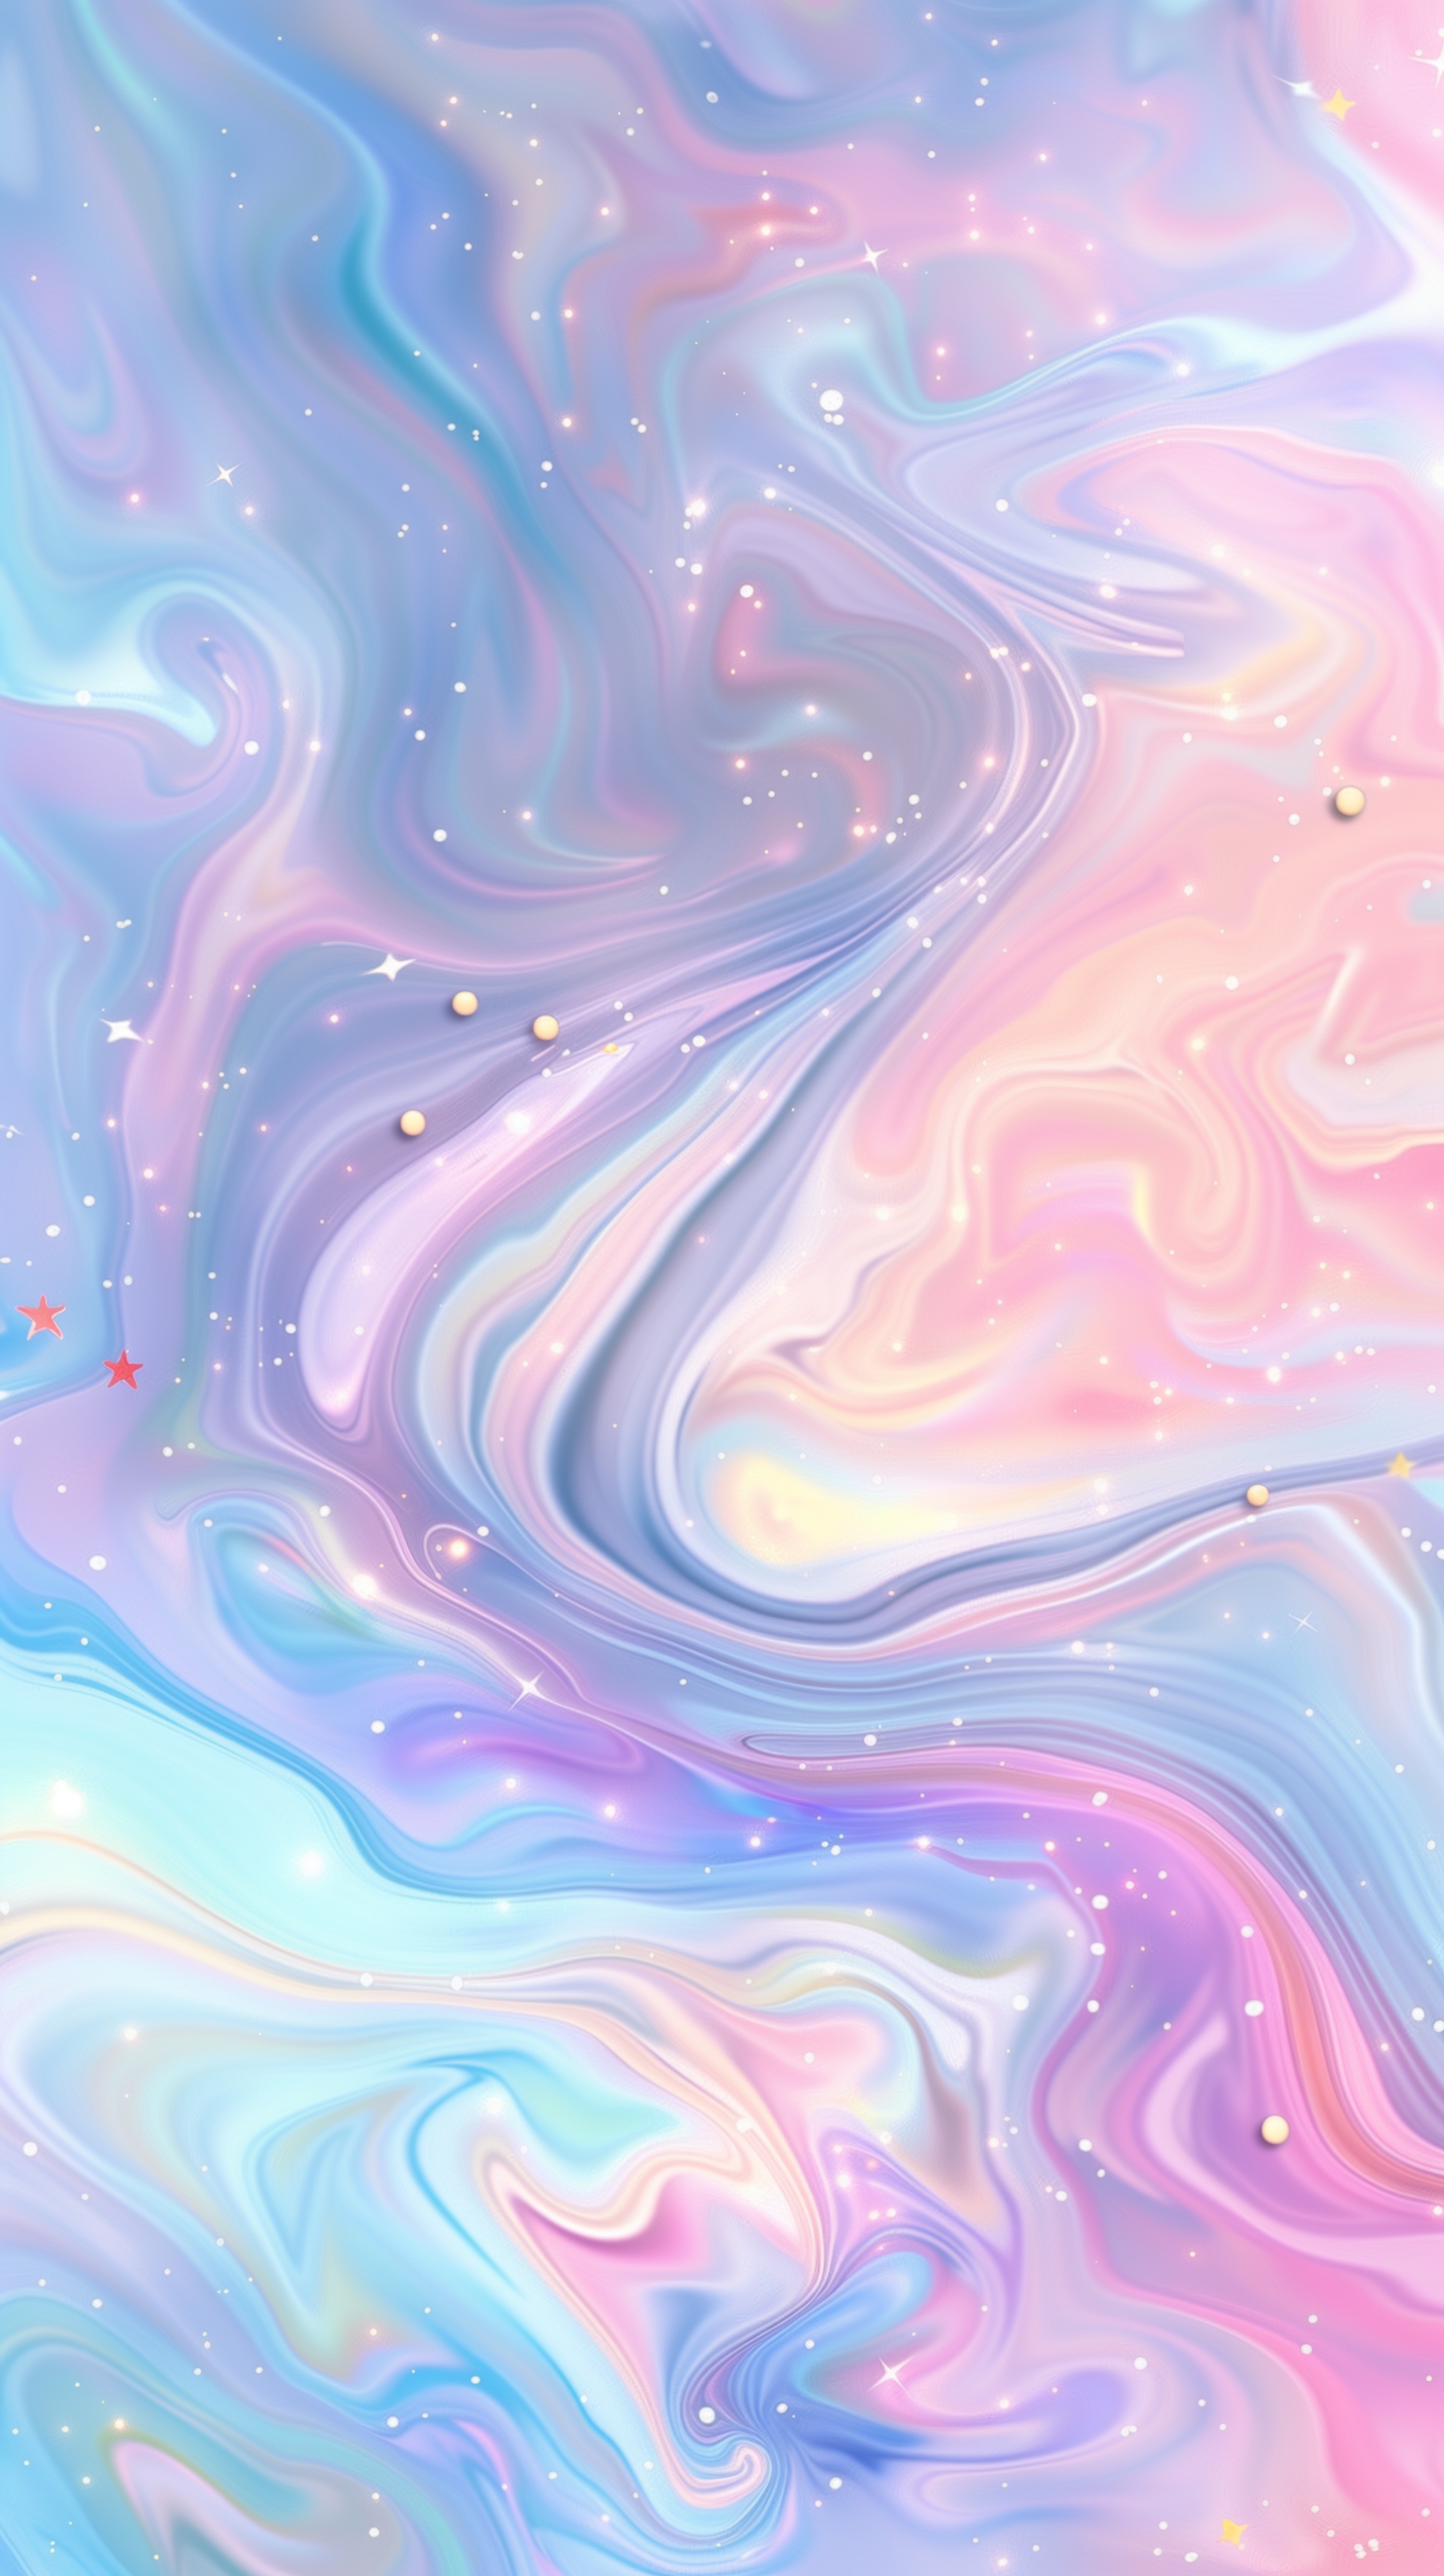 Swirling Pastel Galaxy with Stars Tapéta[58935a042c3f47169f40]